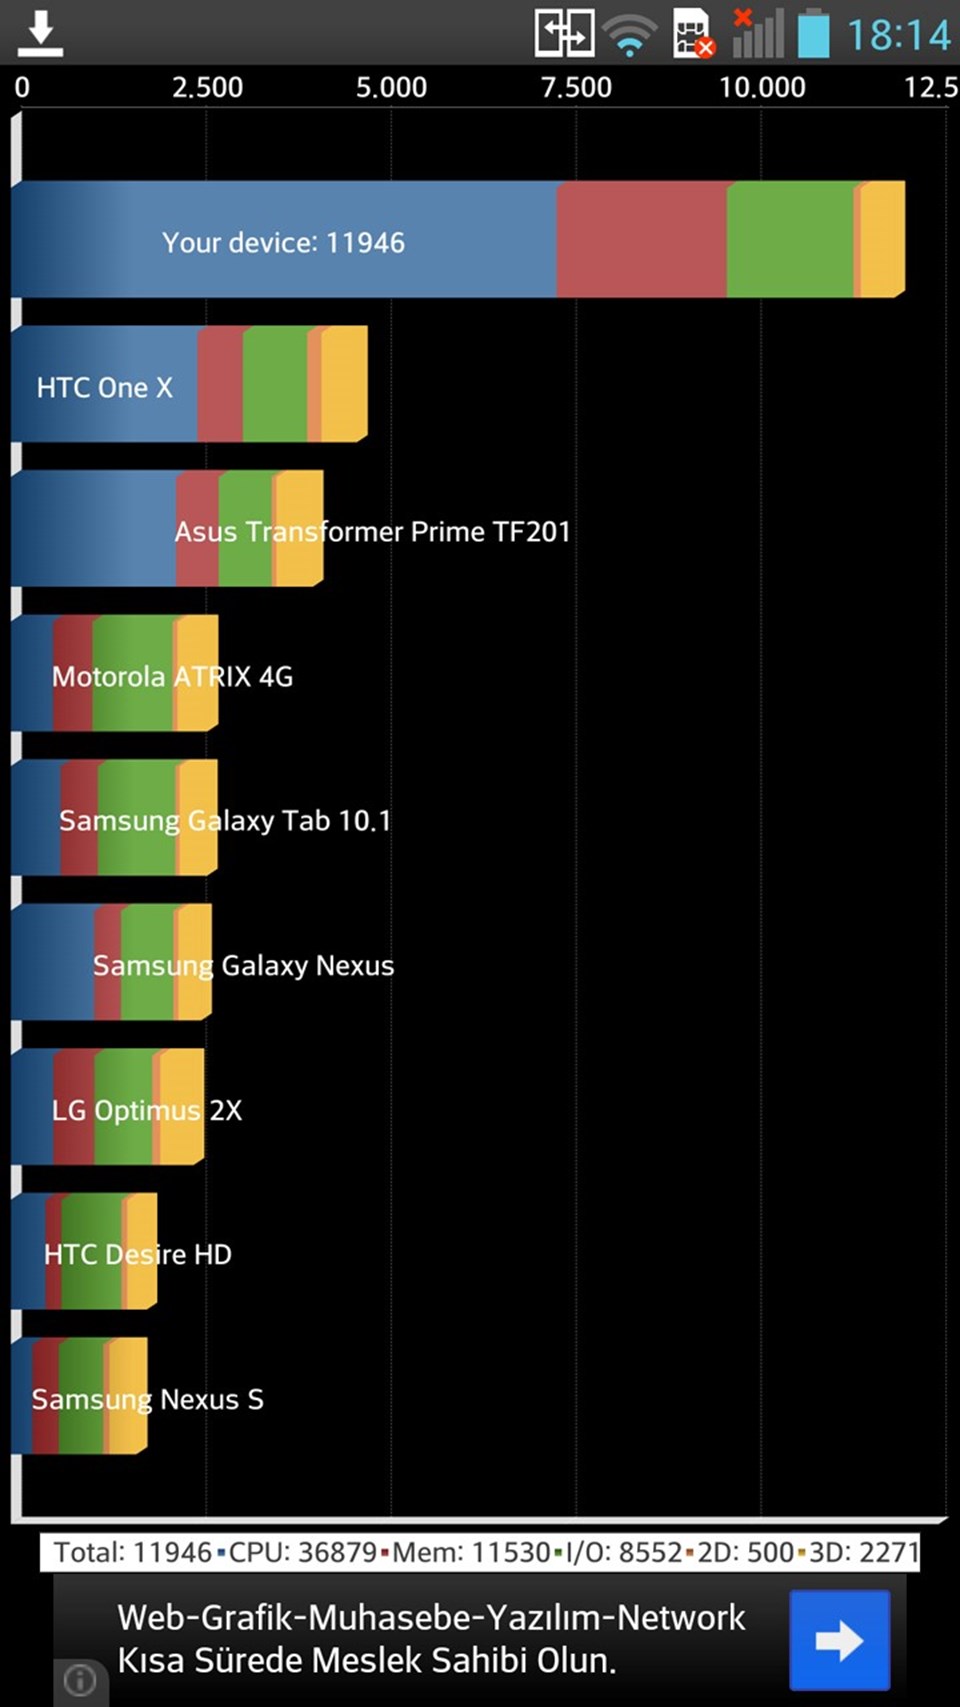 Enerjisi tükenmeyen dev Android: LG G Pro - 15